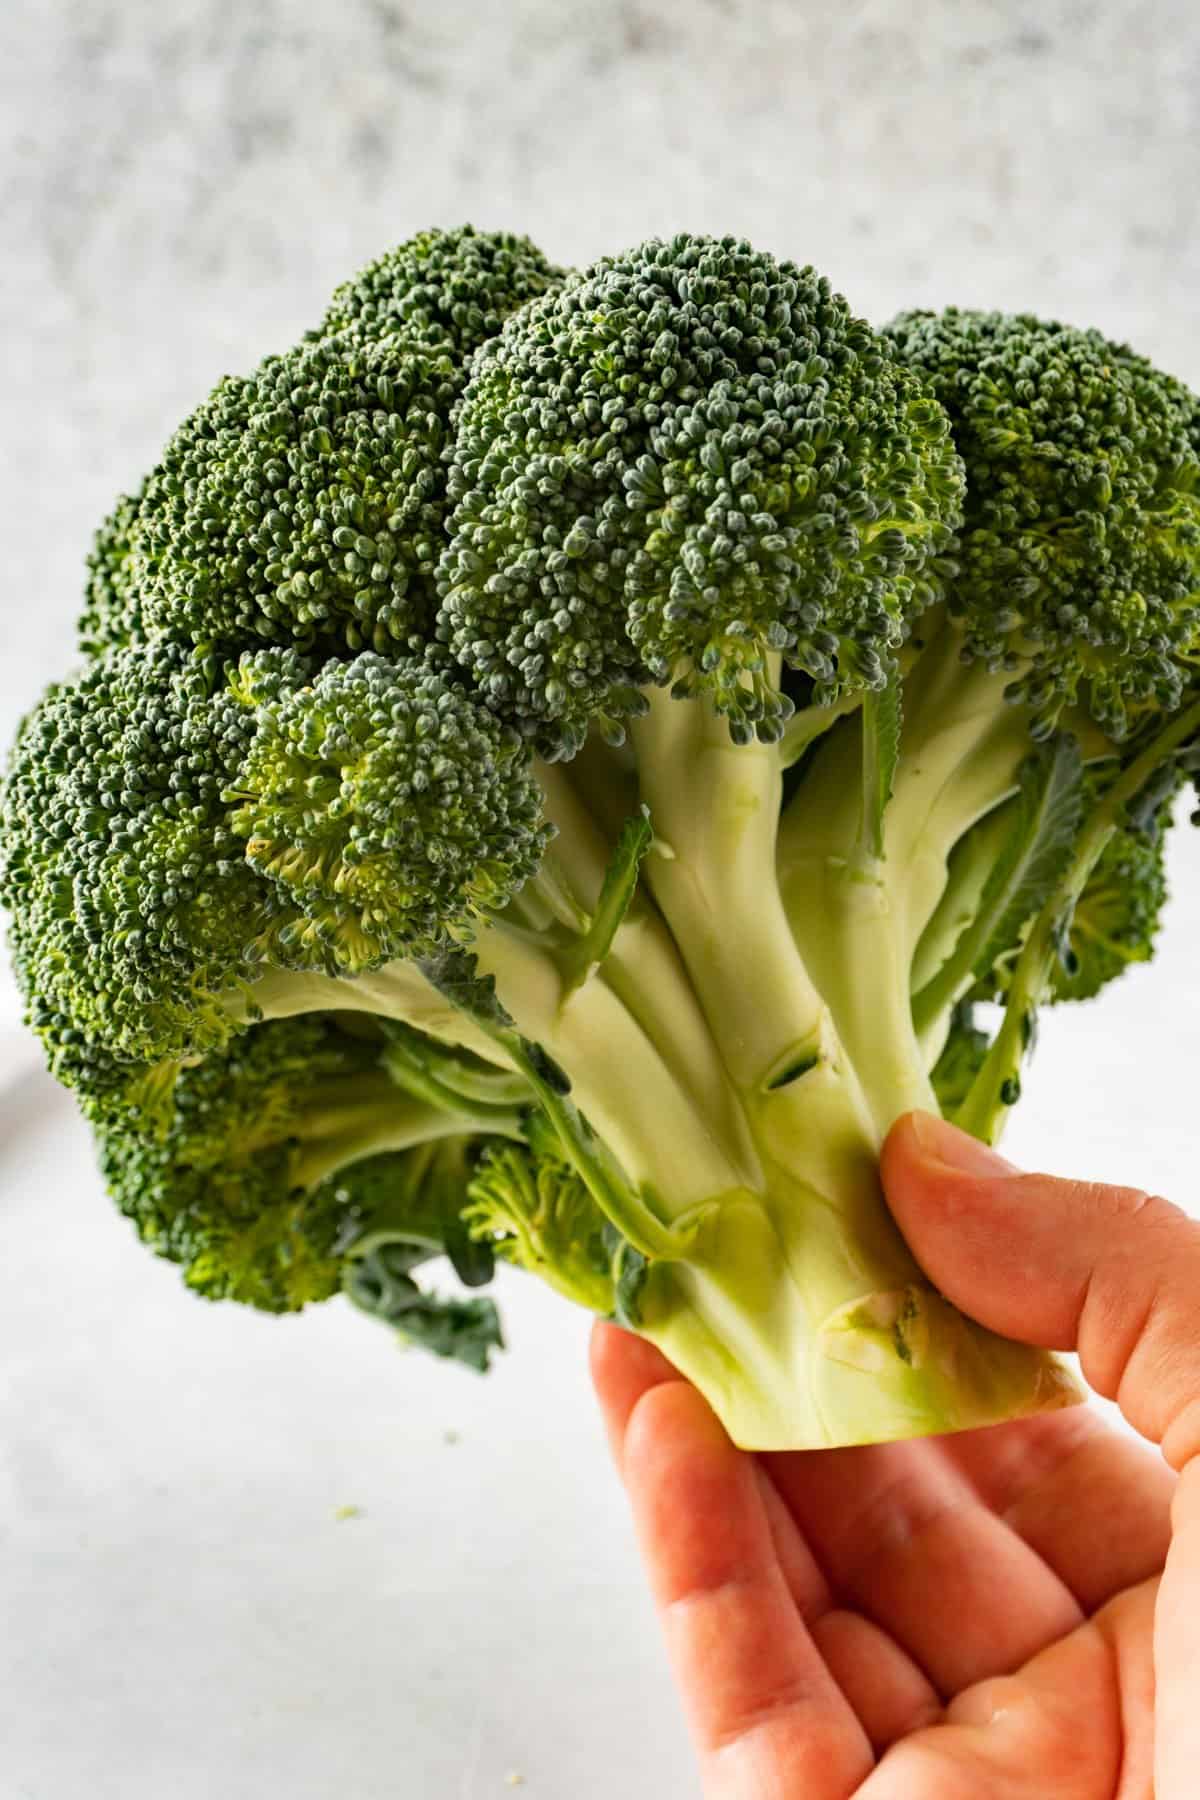 holding a fresh good head of broccoli